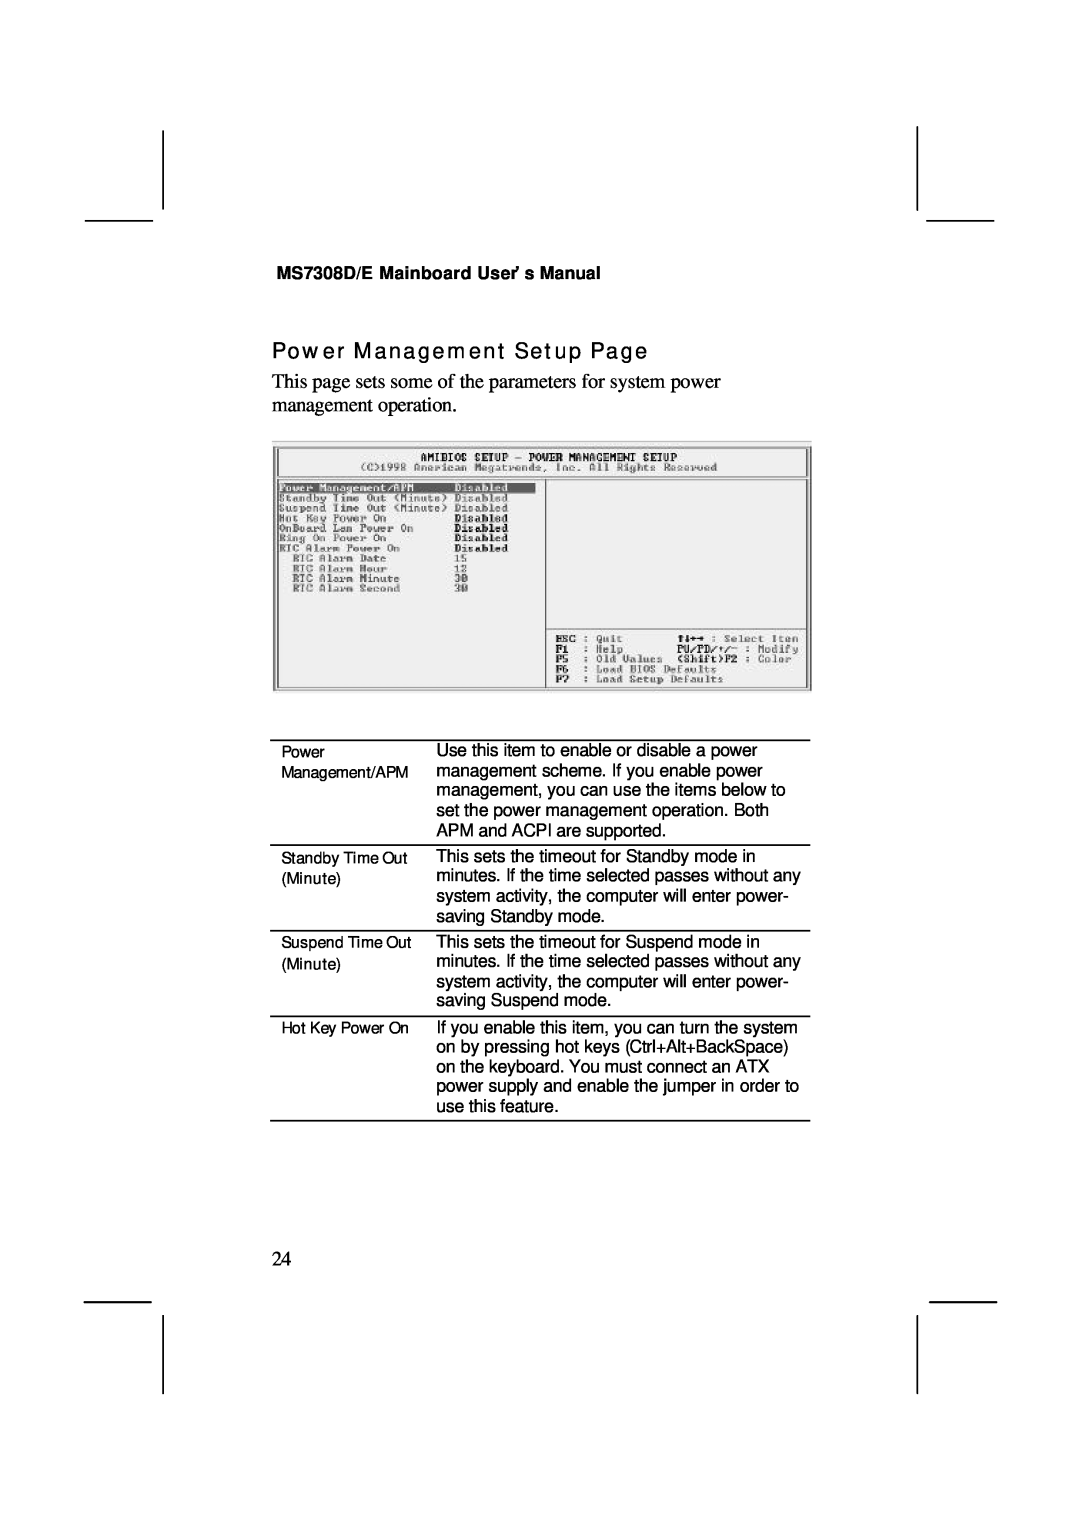 IBM V1.6 S63X/JUNE 2000, MS7308D/E user manual Power Management Setup Page, Power Management/APM 